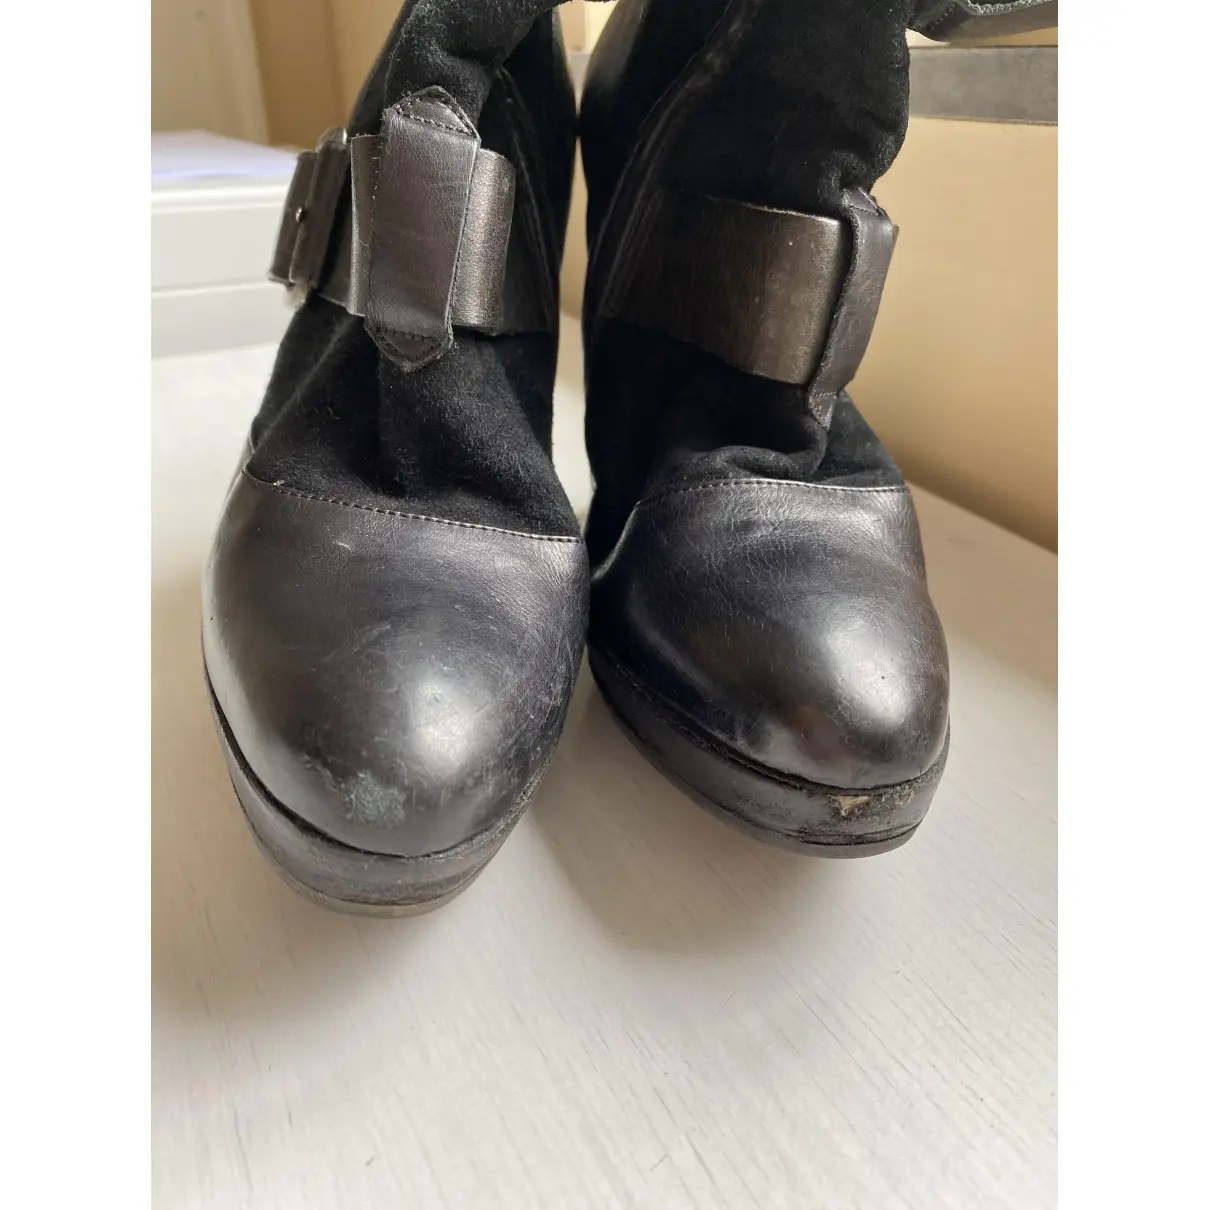 Leather boots Barbara Bui